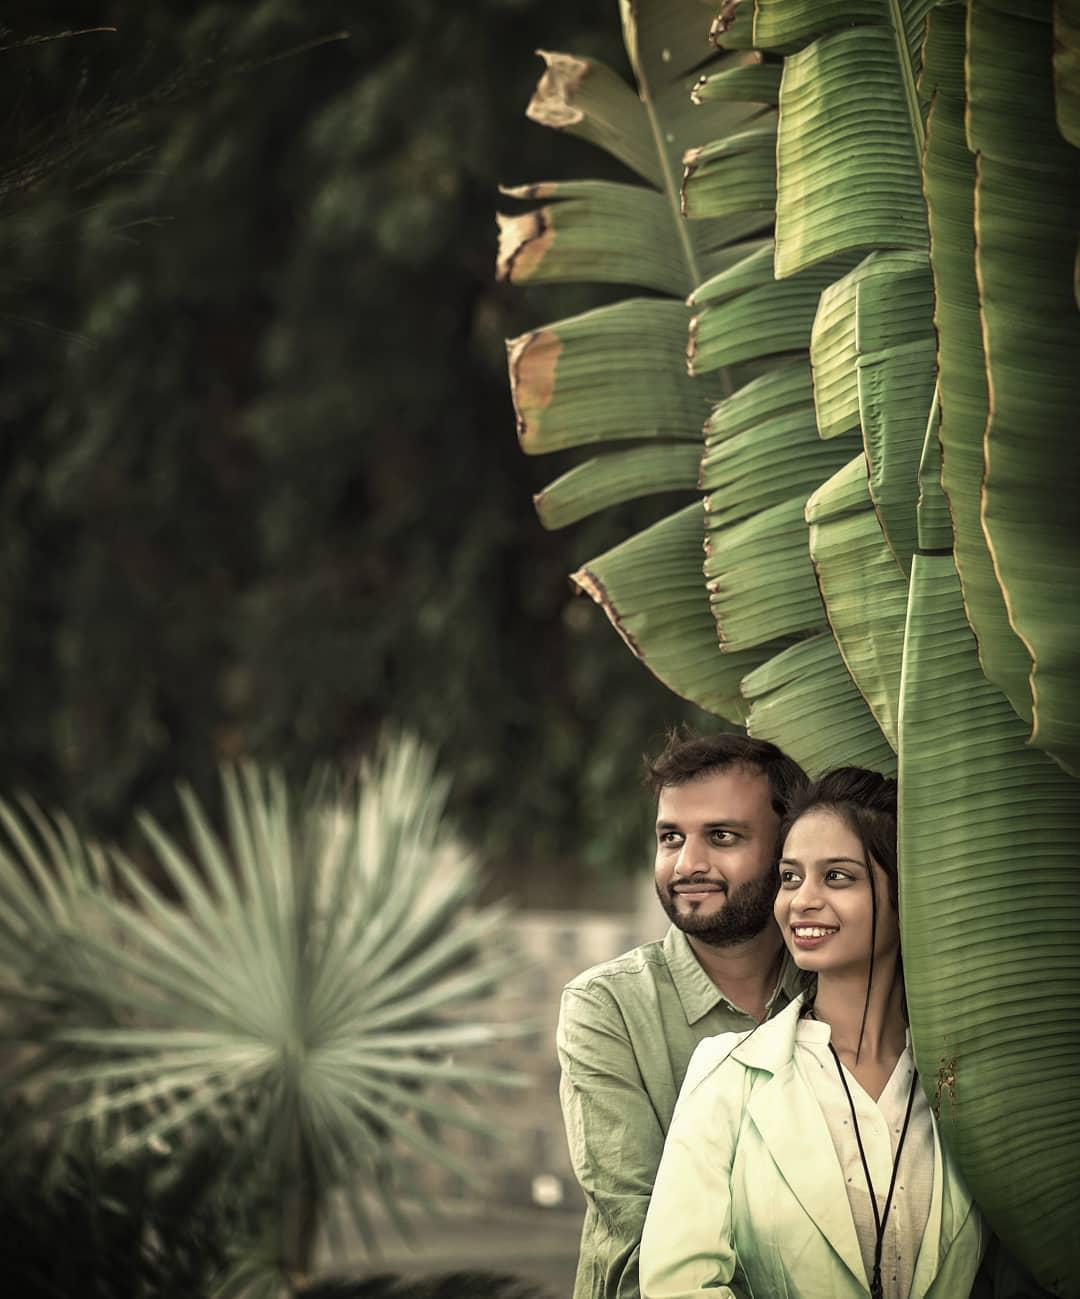 Sharp Imaging Wedding Photographer, Ahmedabad